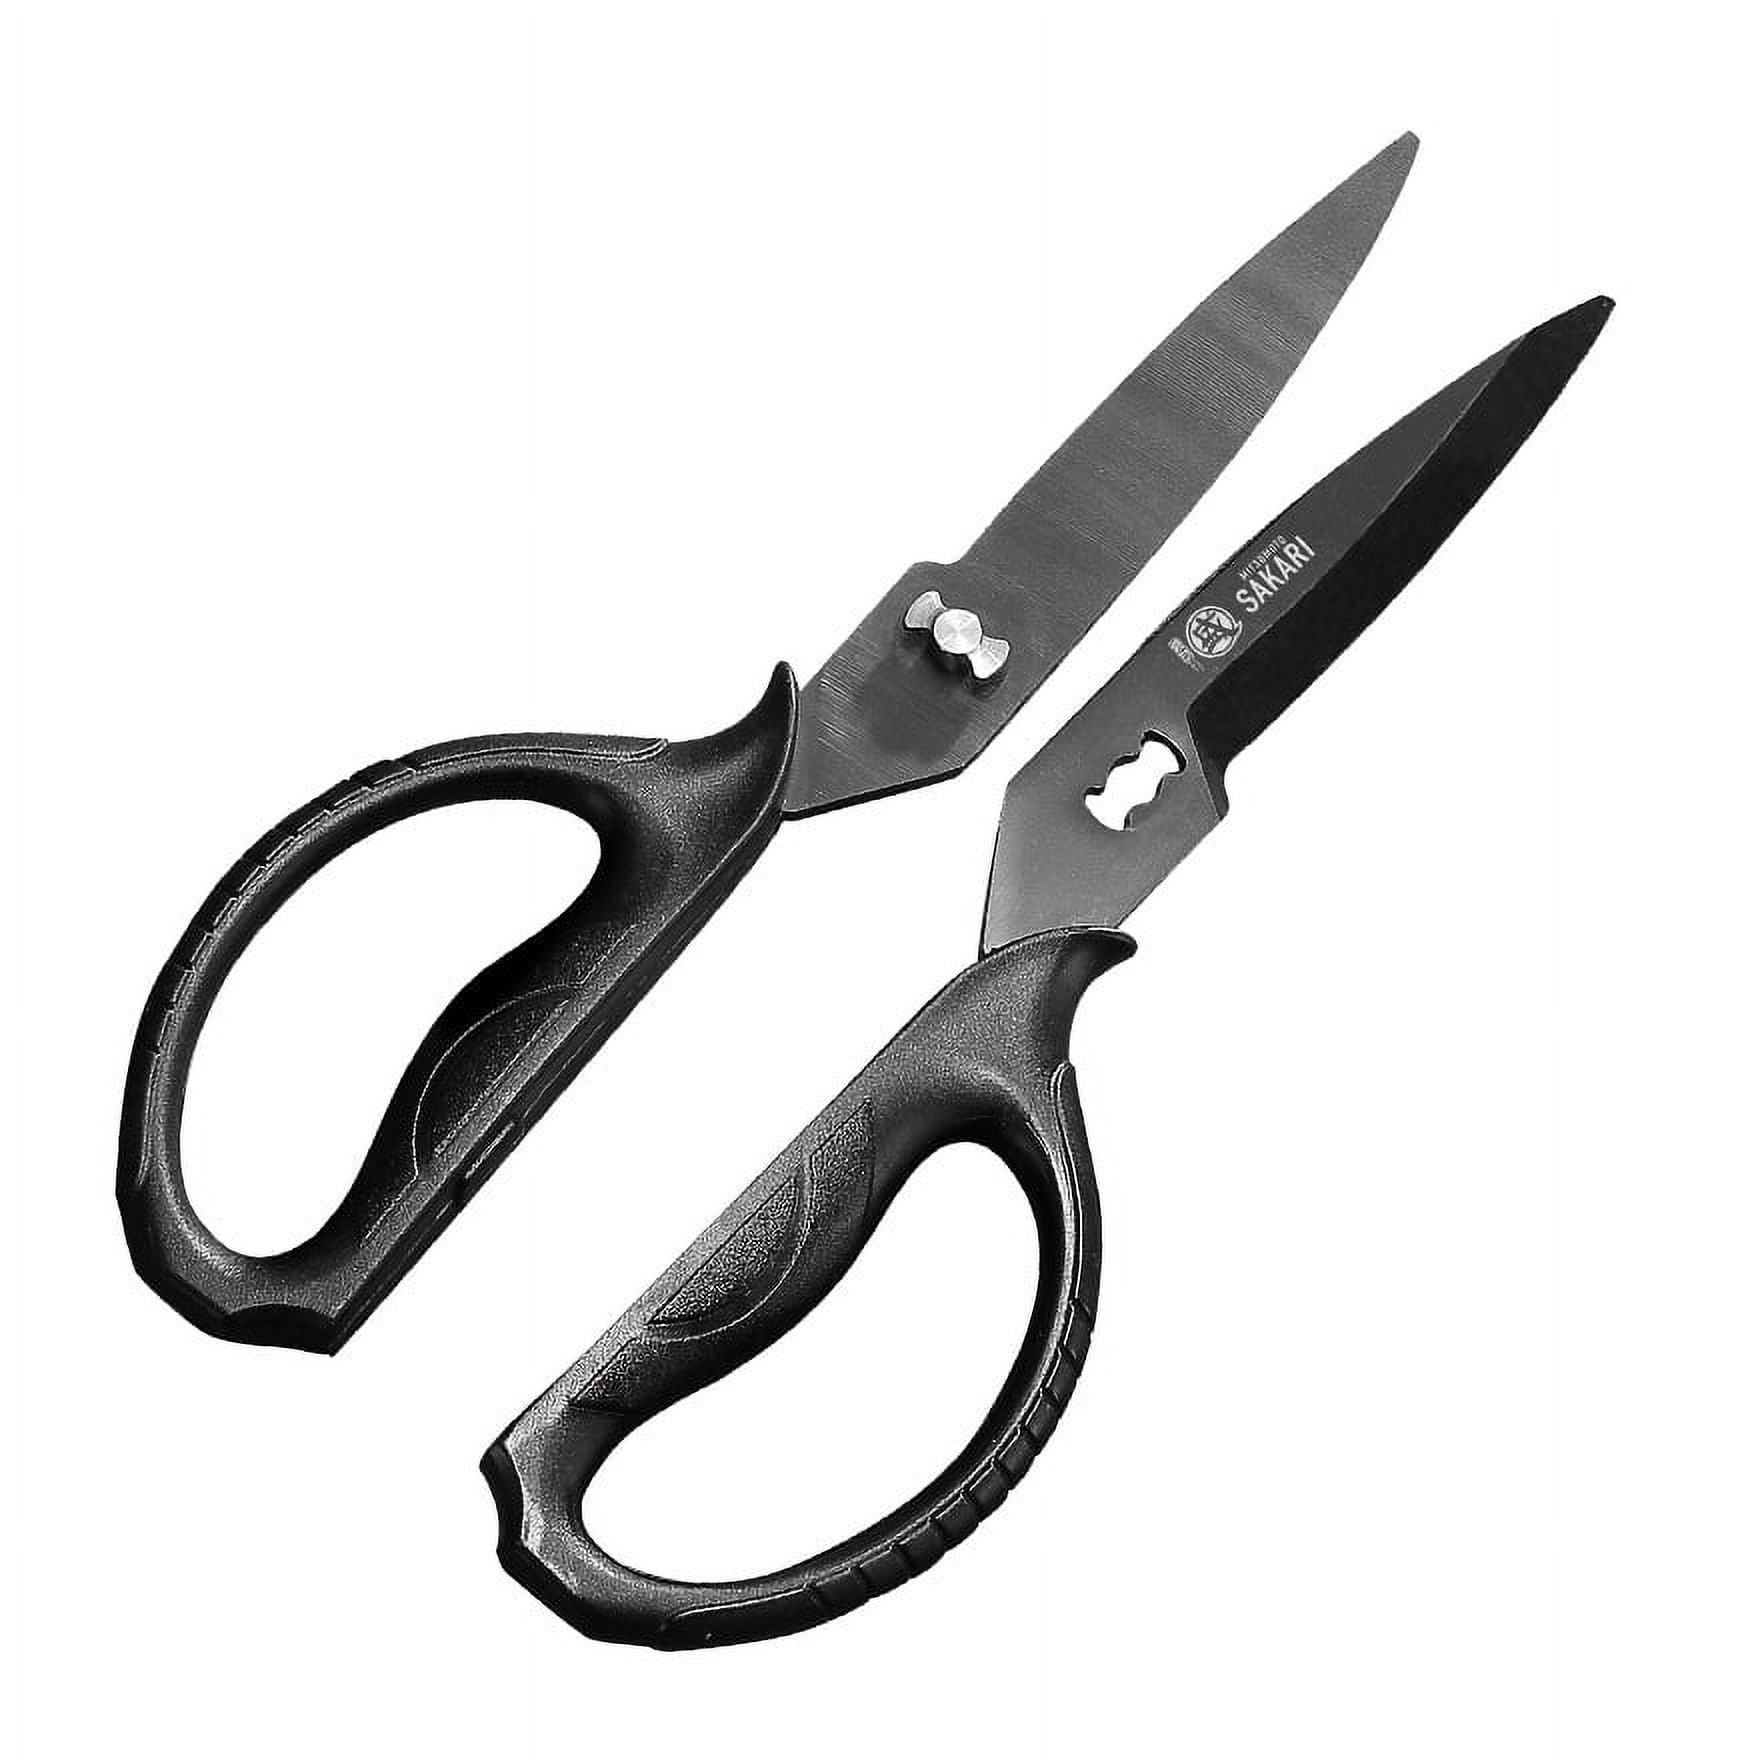 SpitJack Small, Sharp, Precision, Mini Scissors for Kitchen, Twine, String, Herb